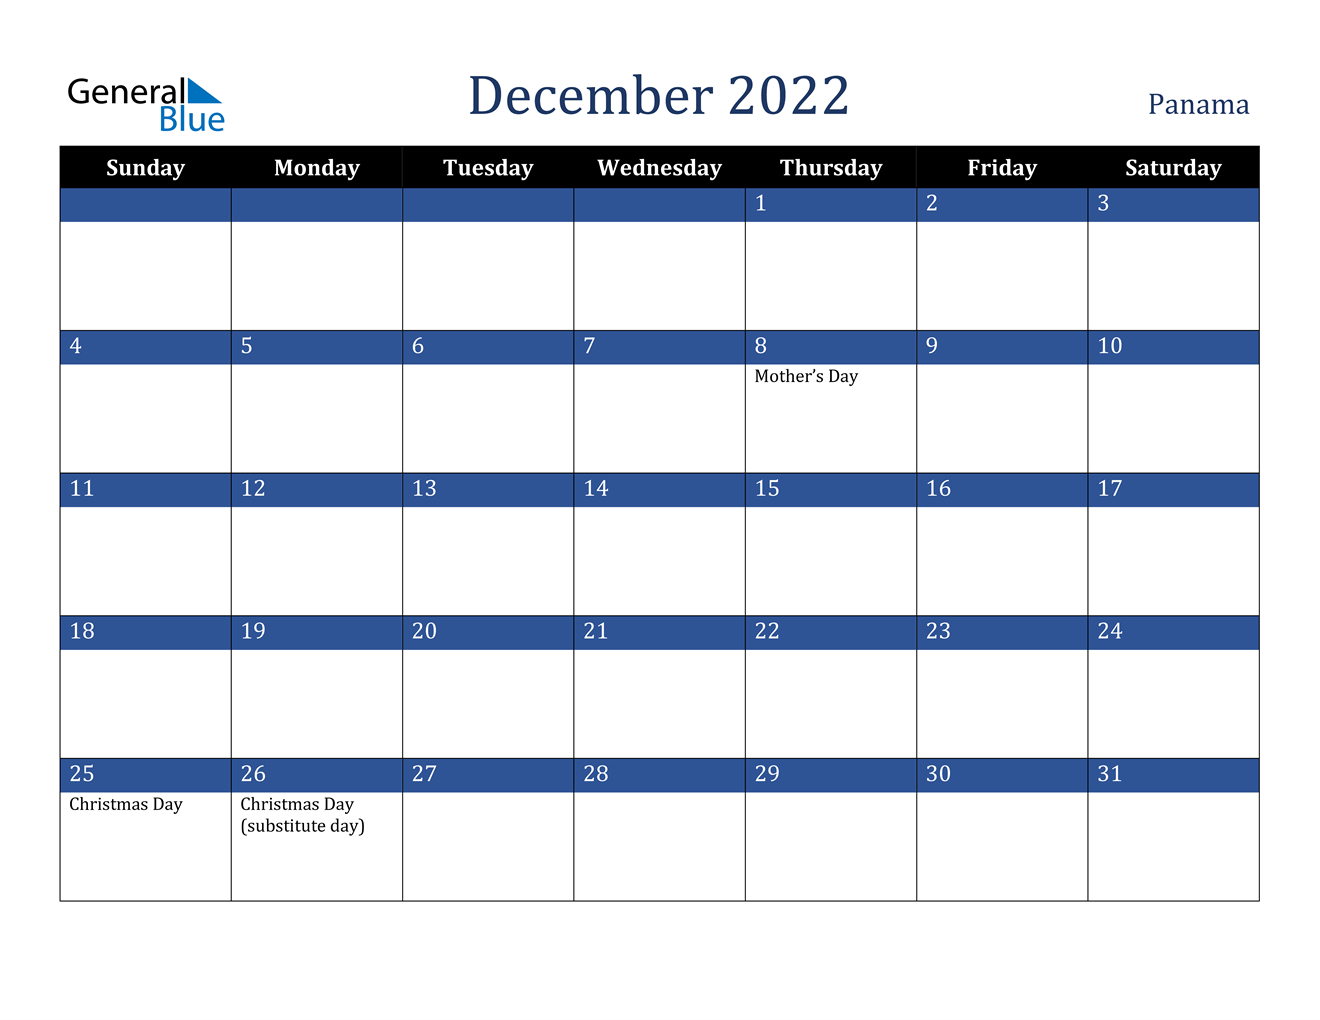 December 2022 Calendar - Panama  December 2022 Calendar Template